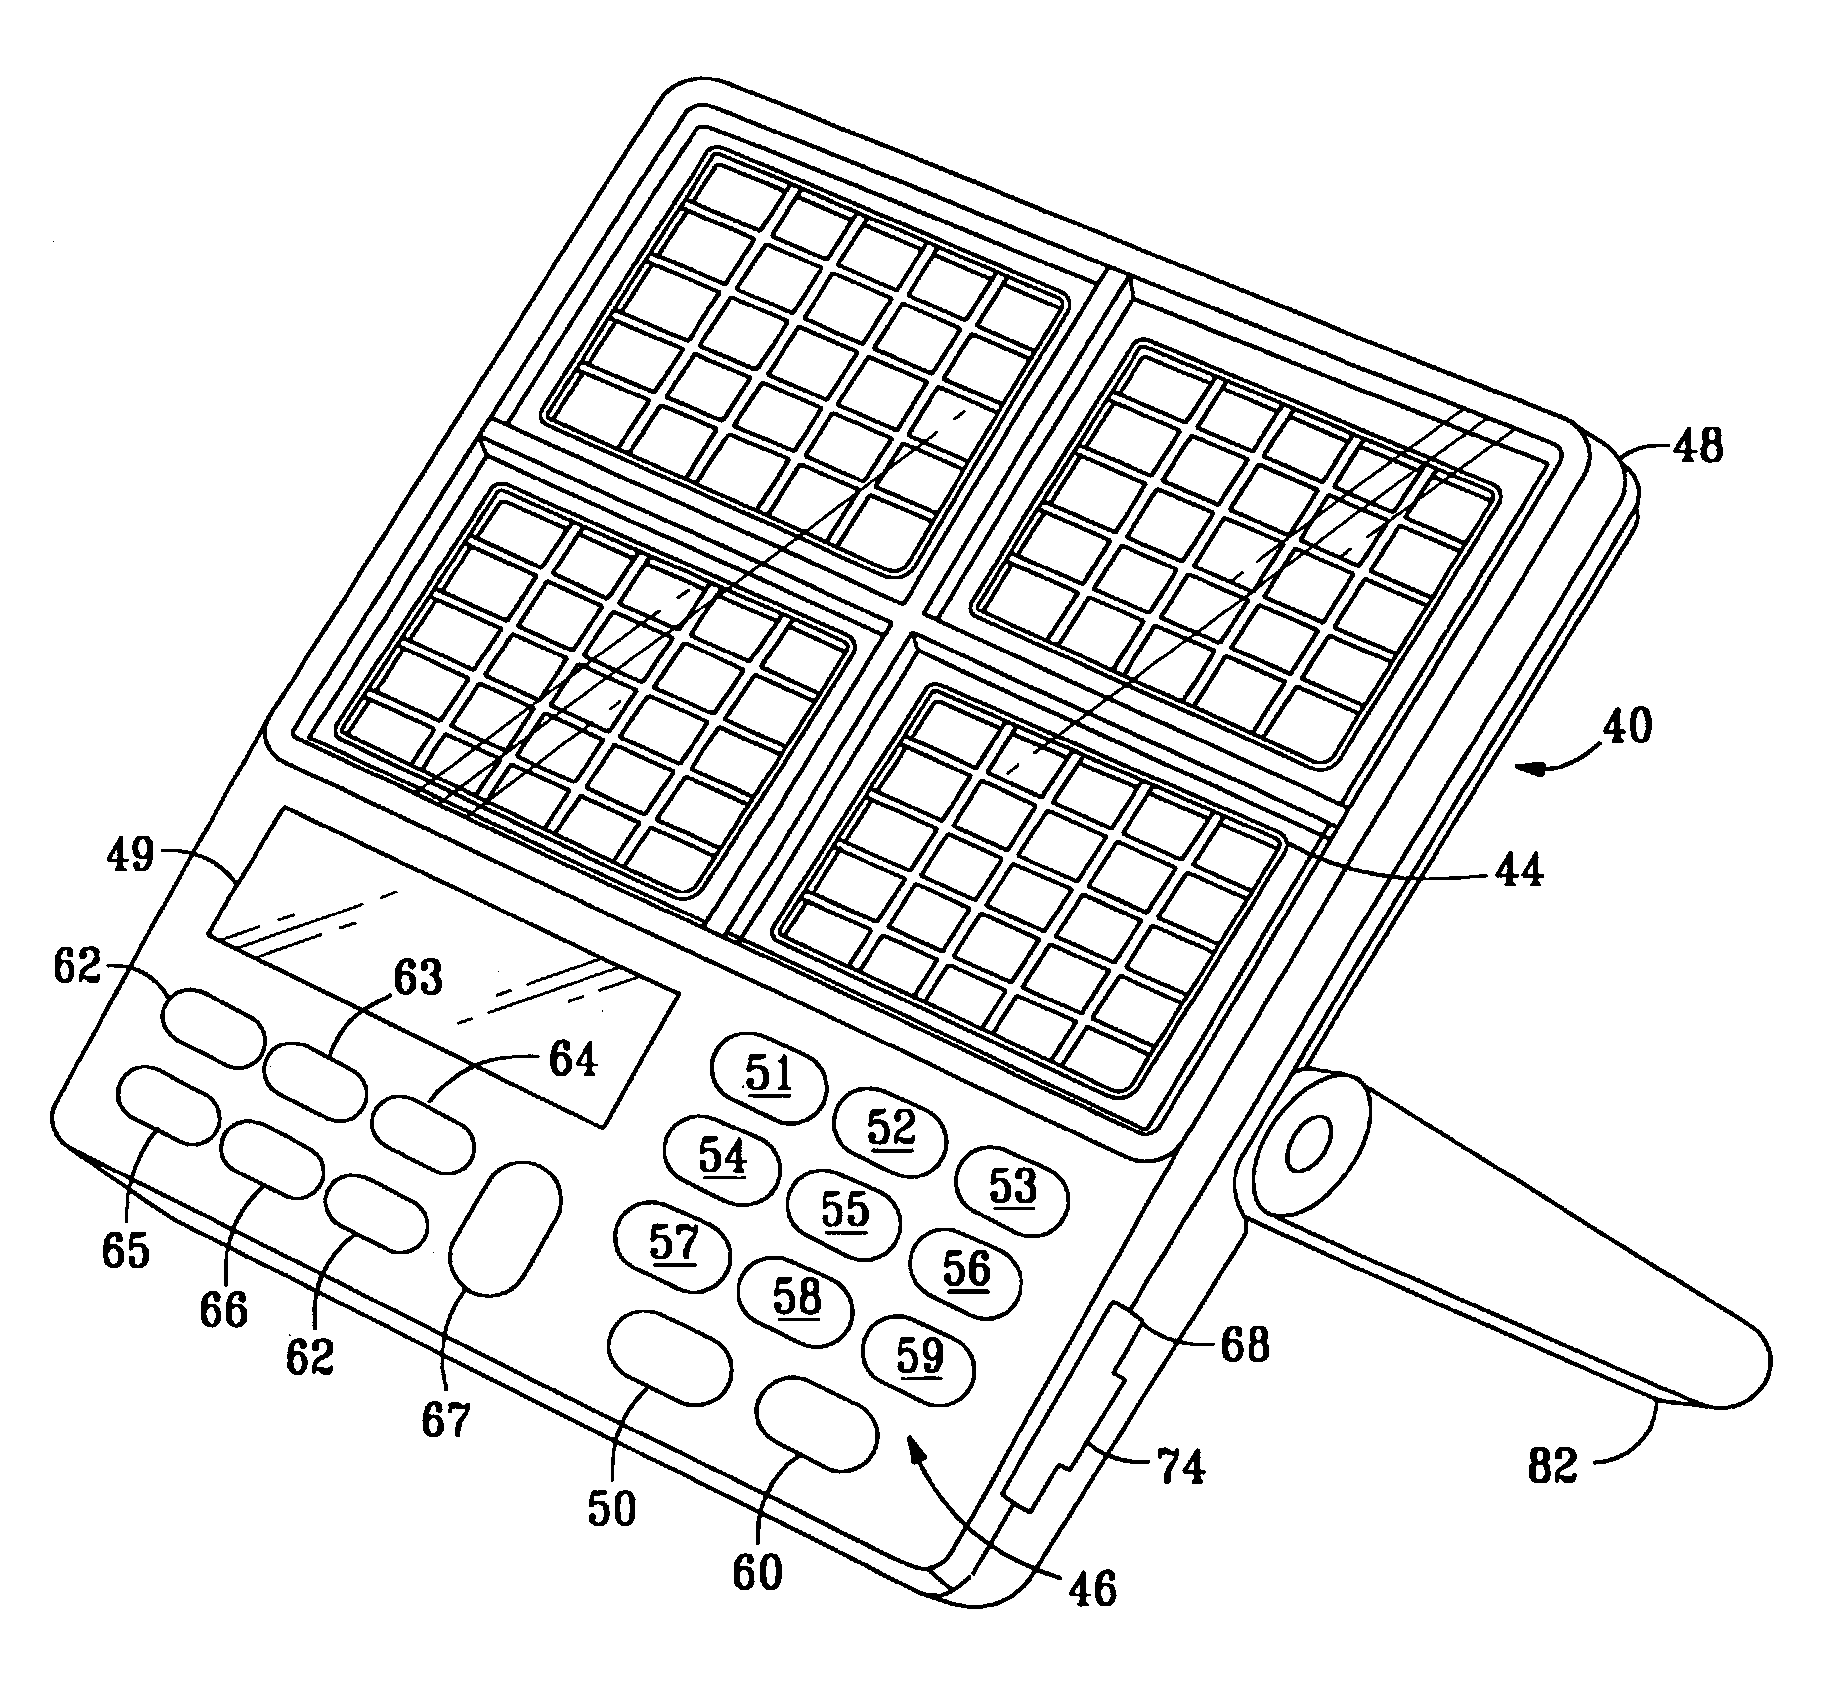 Portable electronic bingo device